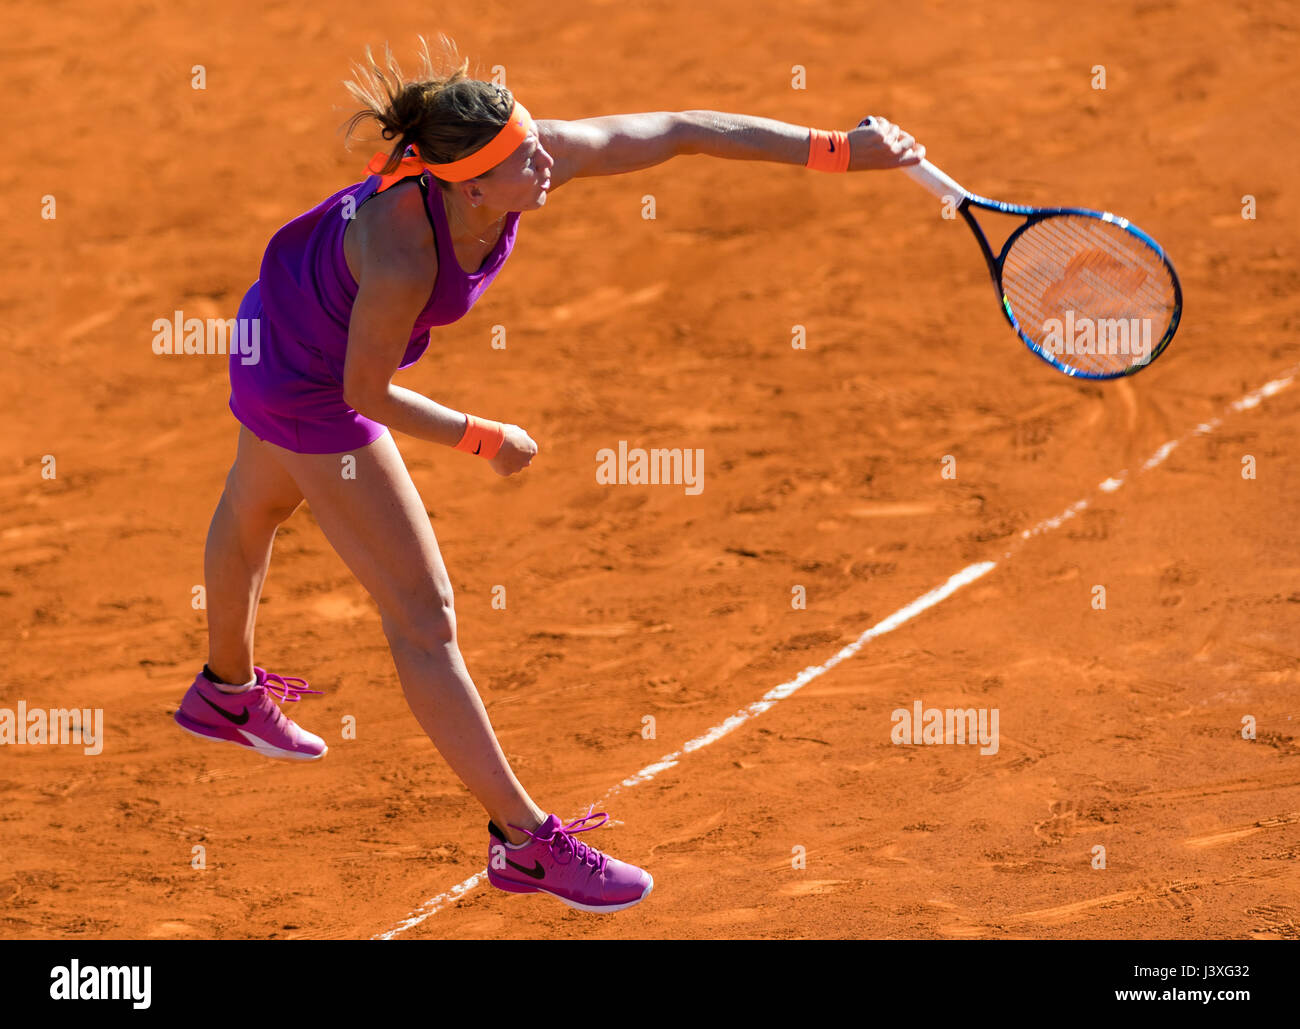 MADRID, SPAIN - MAY 7 : Lucie Safarova at the 2017 Mutua Madrid Open WTA Premier Mandatory tennis tournament Stock Photo